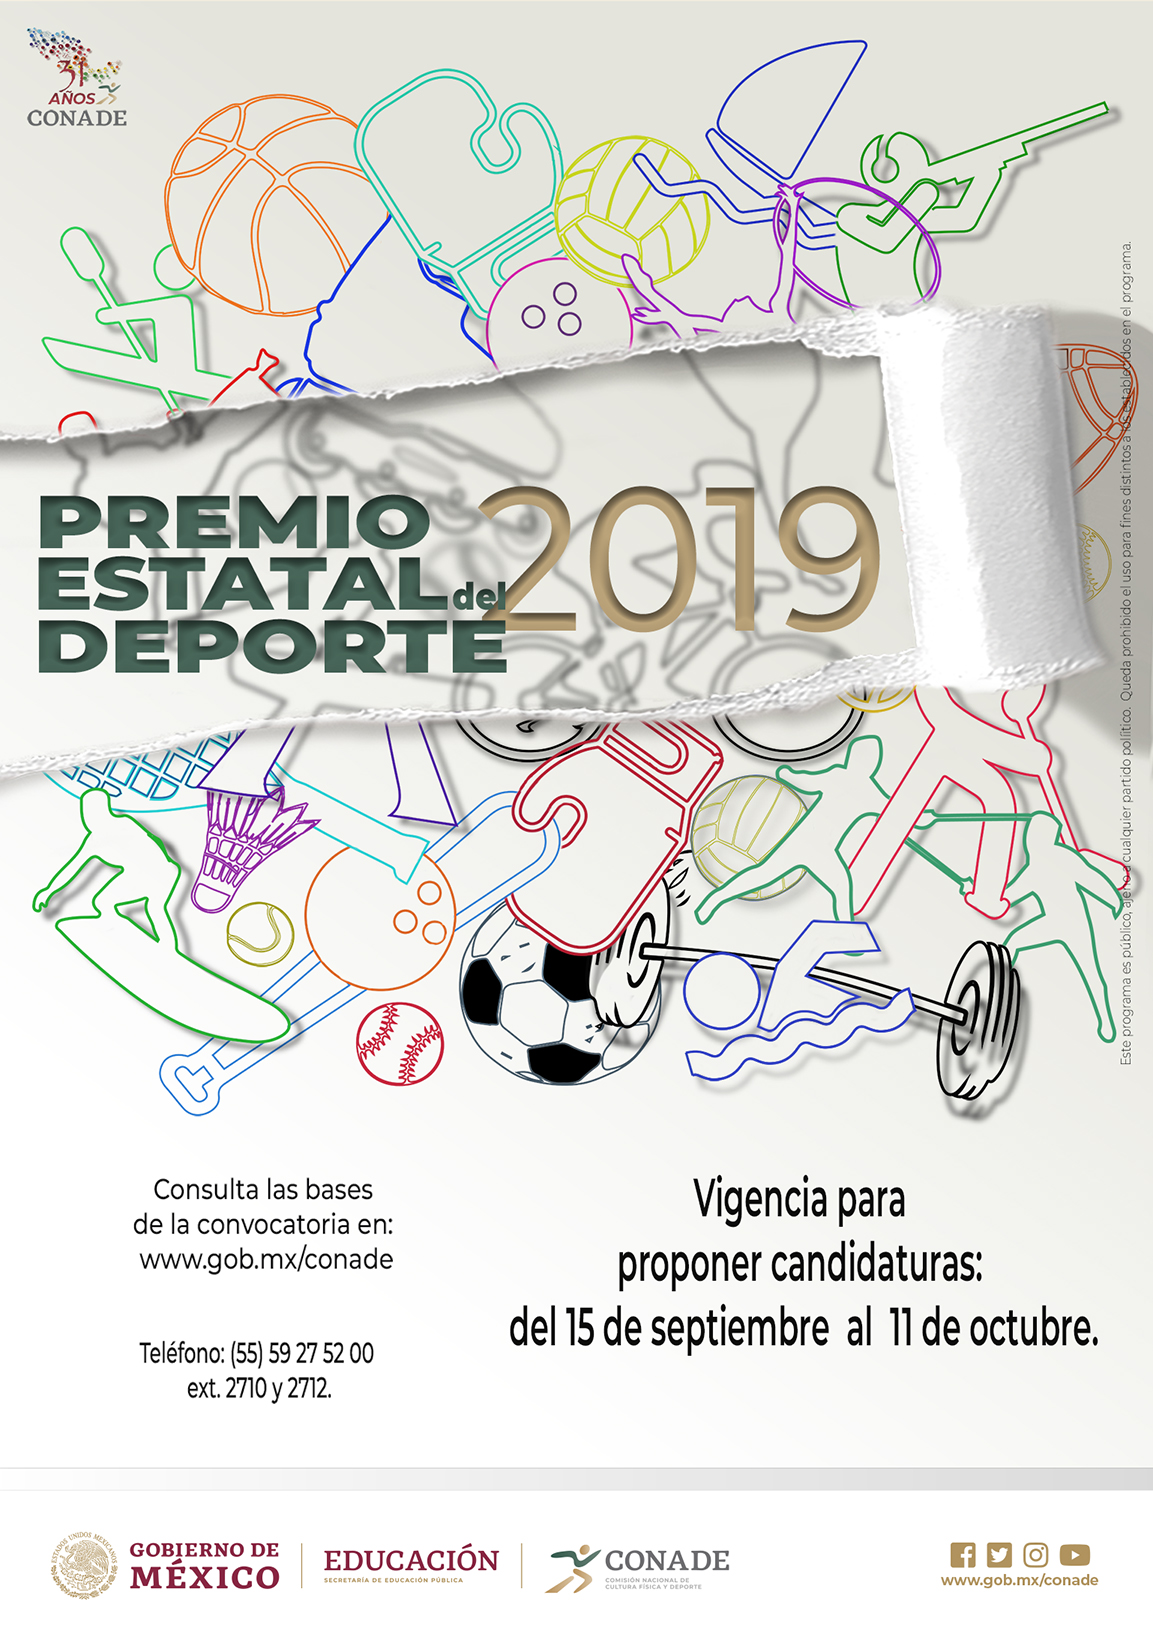 /cms/uploads/image/file/527205/Premio_Estatal_del_Deporte_2019.jpg